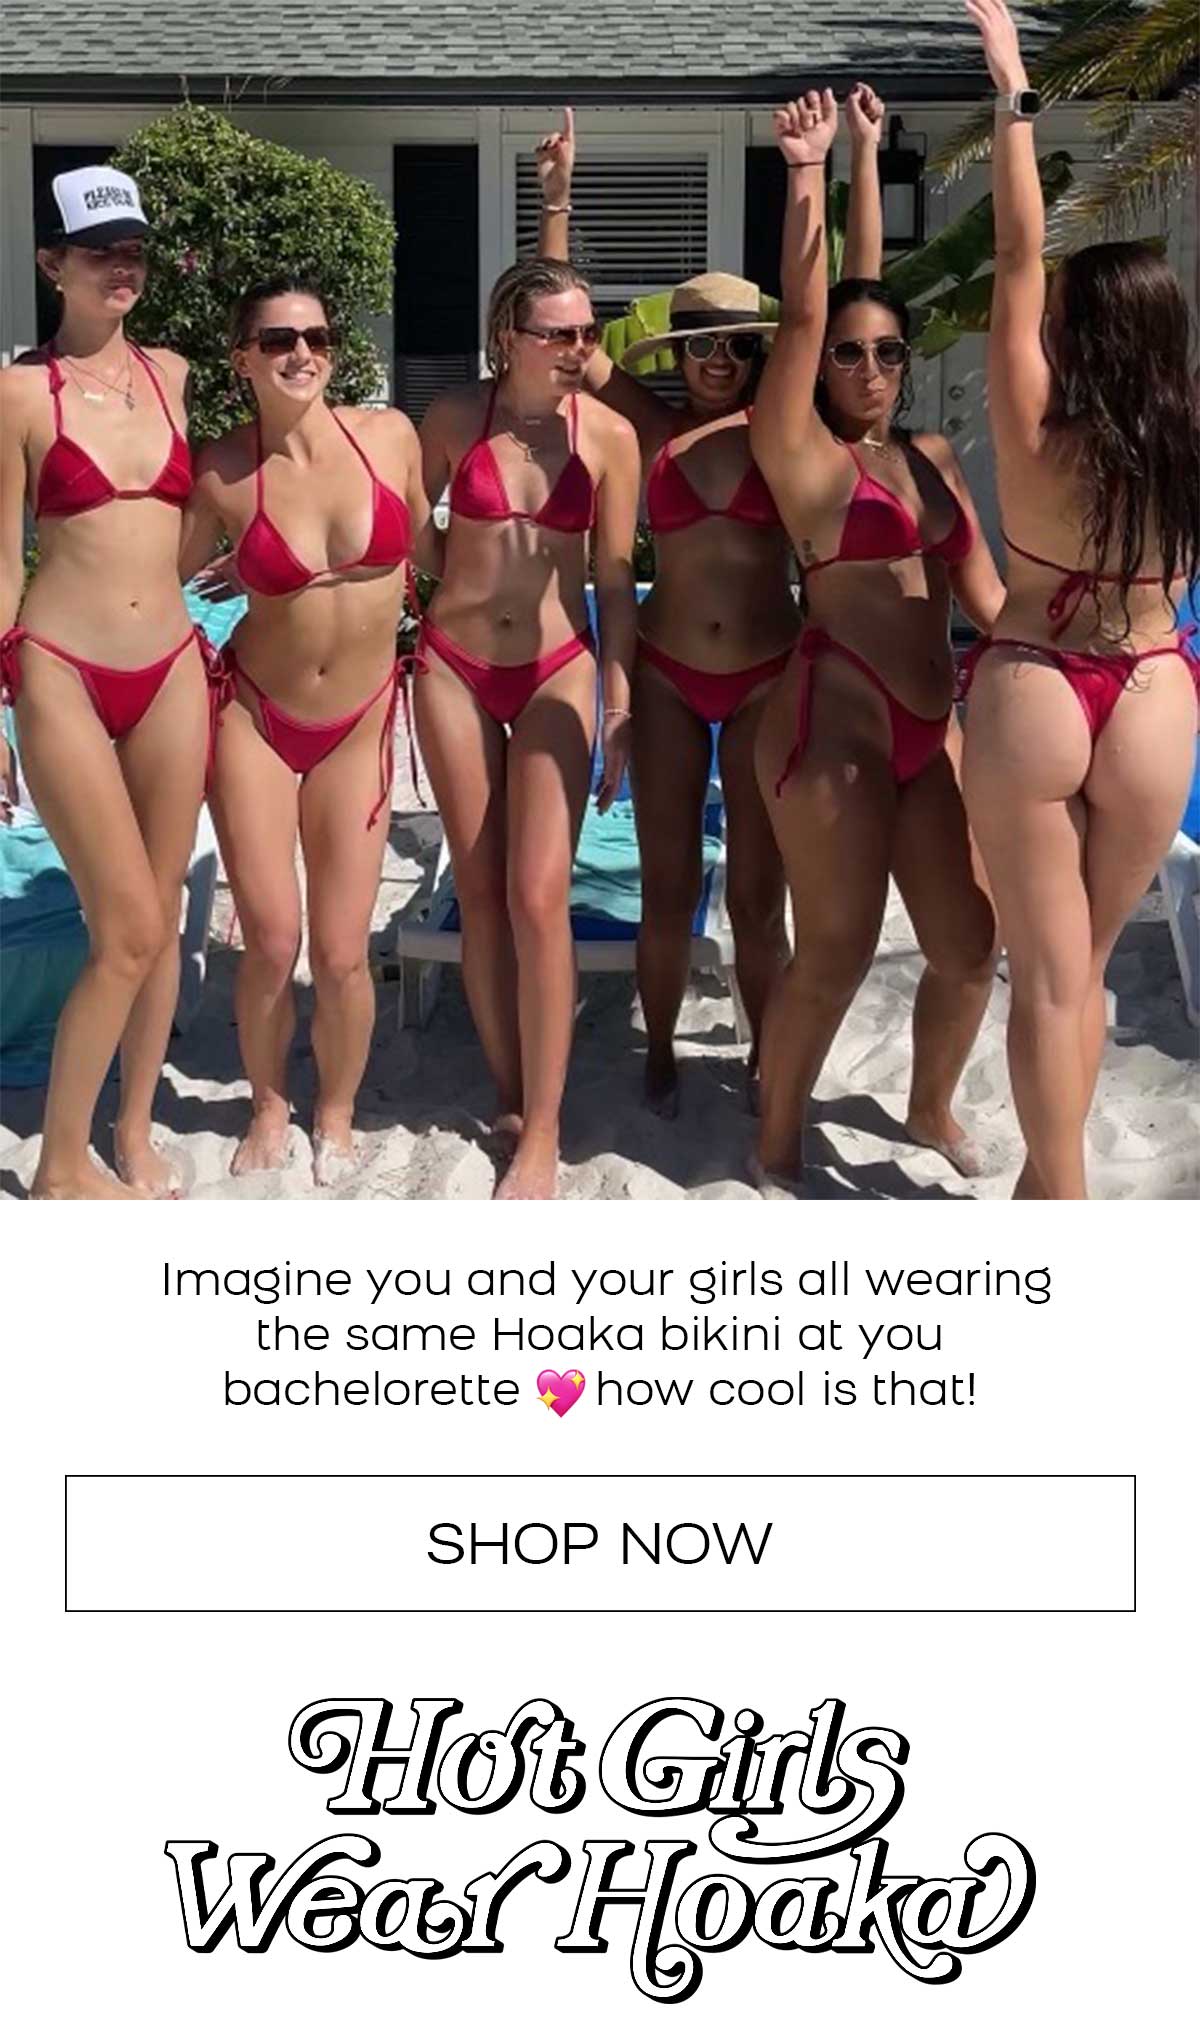 Imagine you and your girls all wearing the same Hoaka bikini at you bachelorette how cool is that!